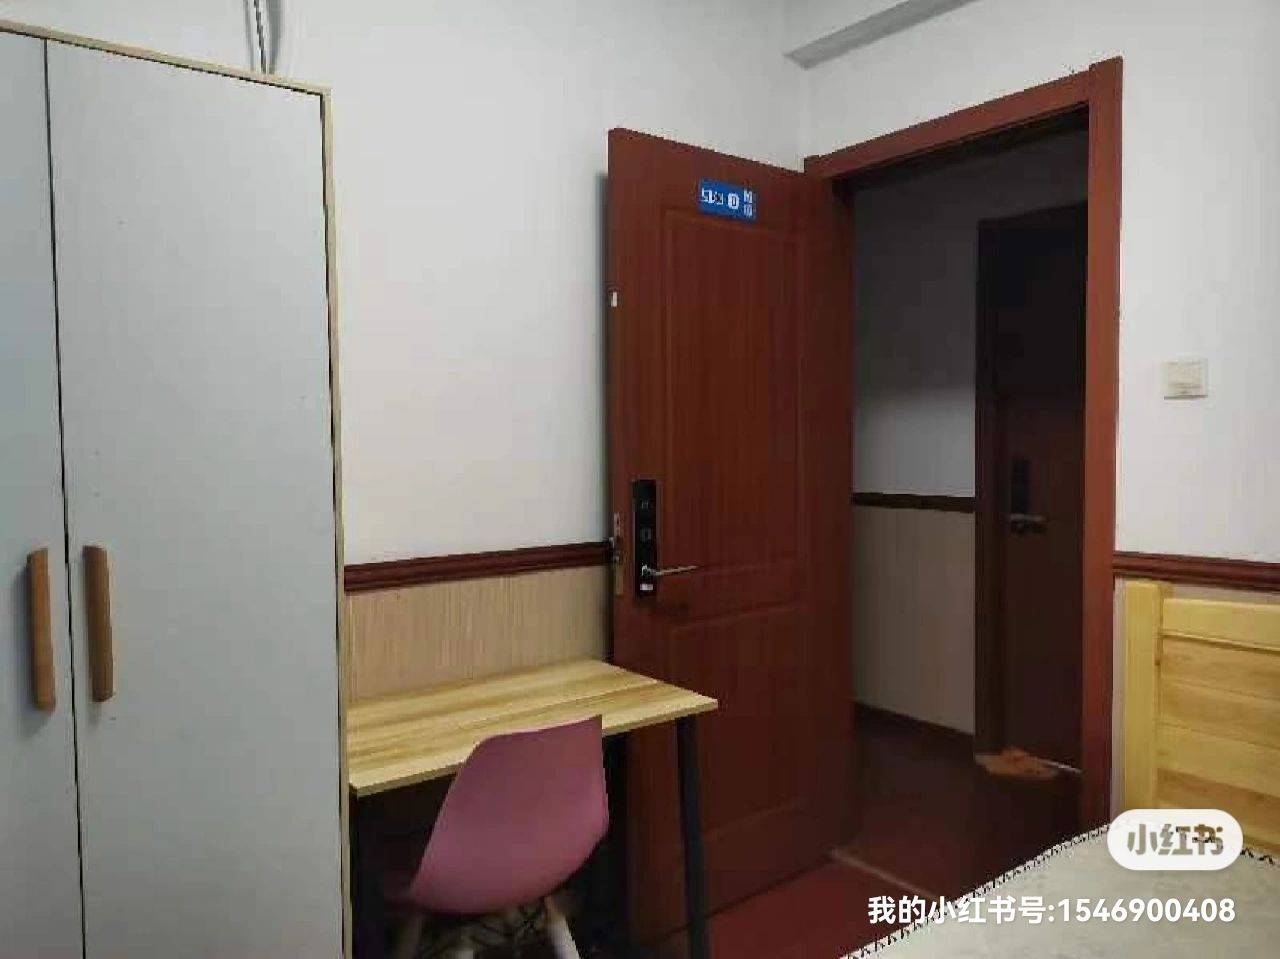 Hangzhou-Xiaoshan-Cozy Home,Clean&Comfy,No Gender Limit,Chilled,LGBTQ Friendly